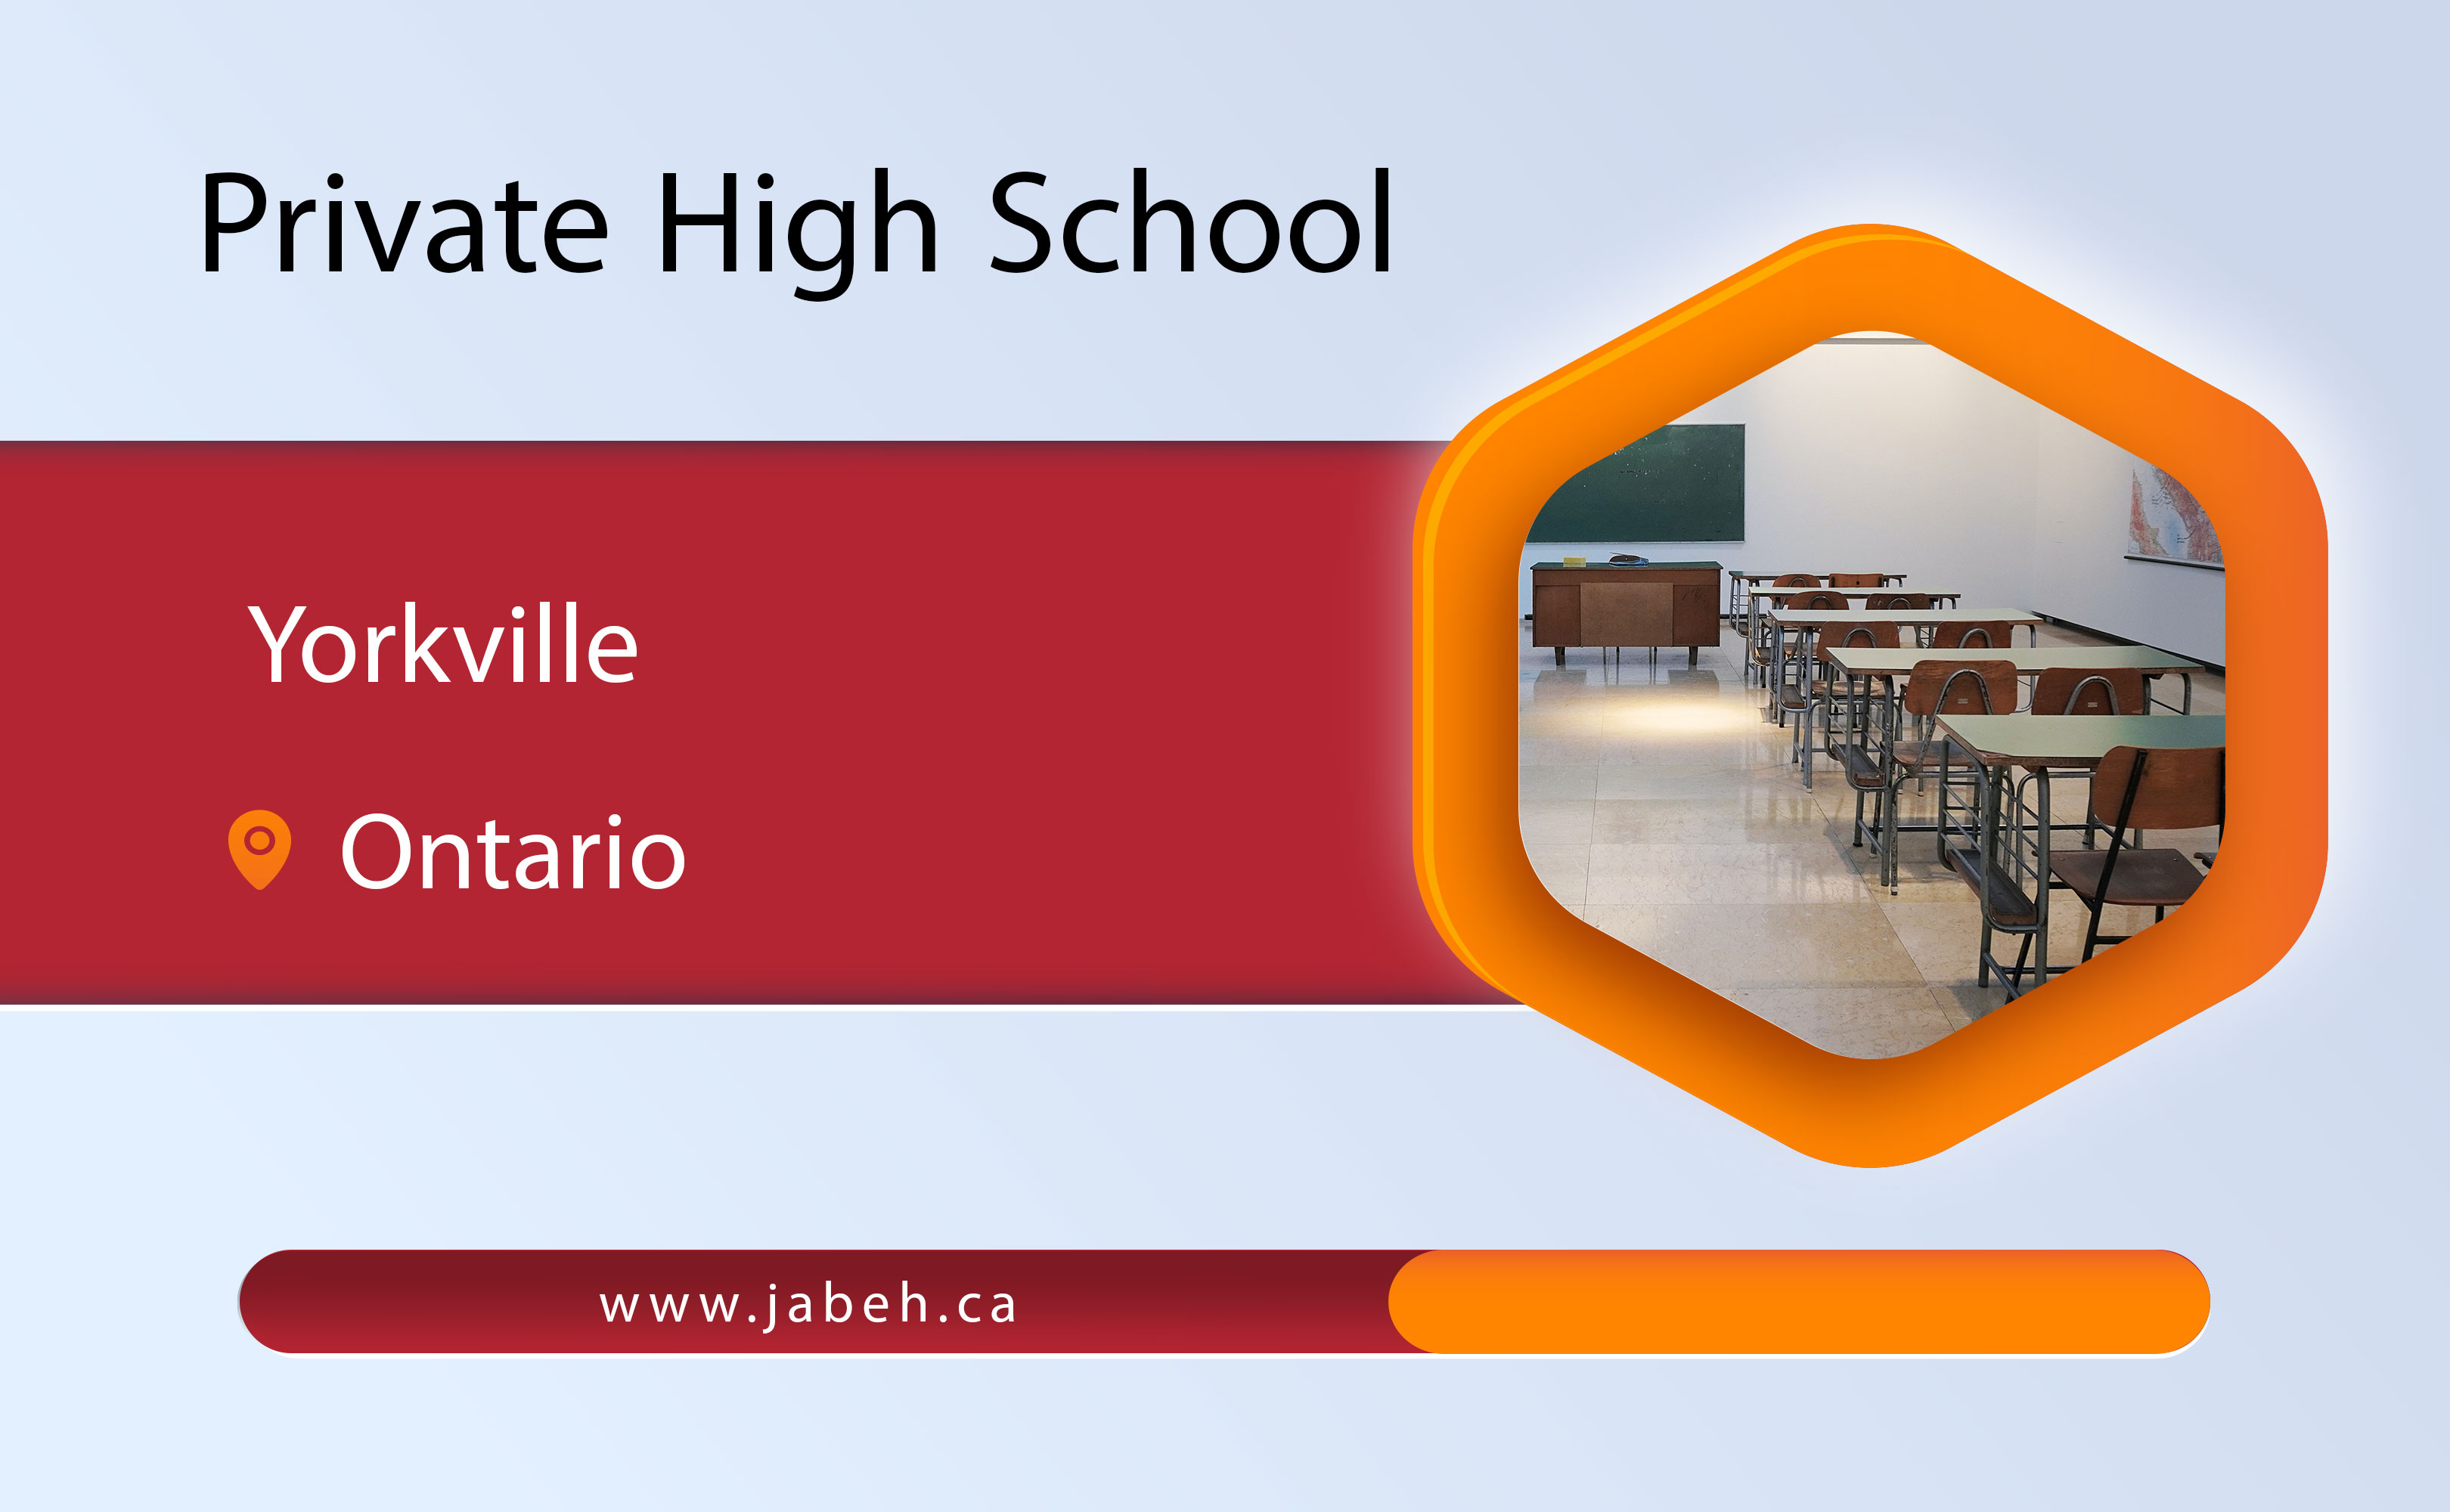 Yorkville Private High School in Ontario